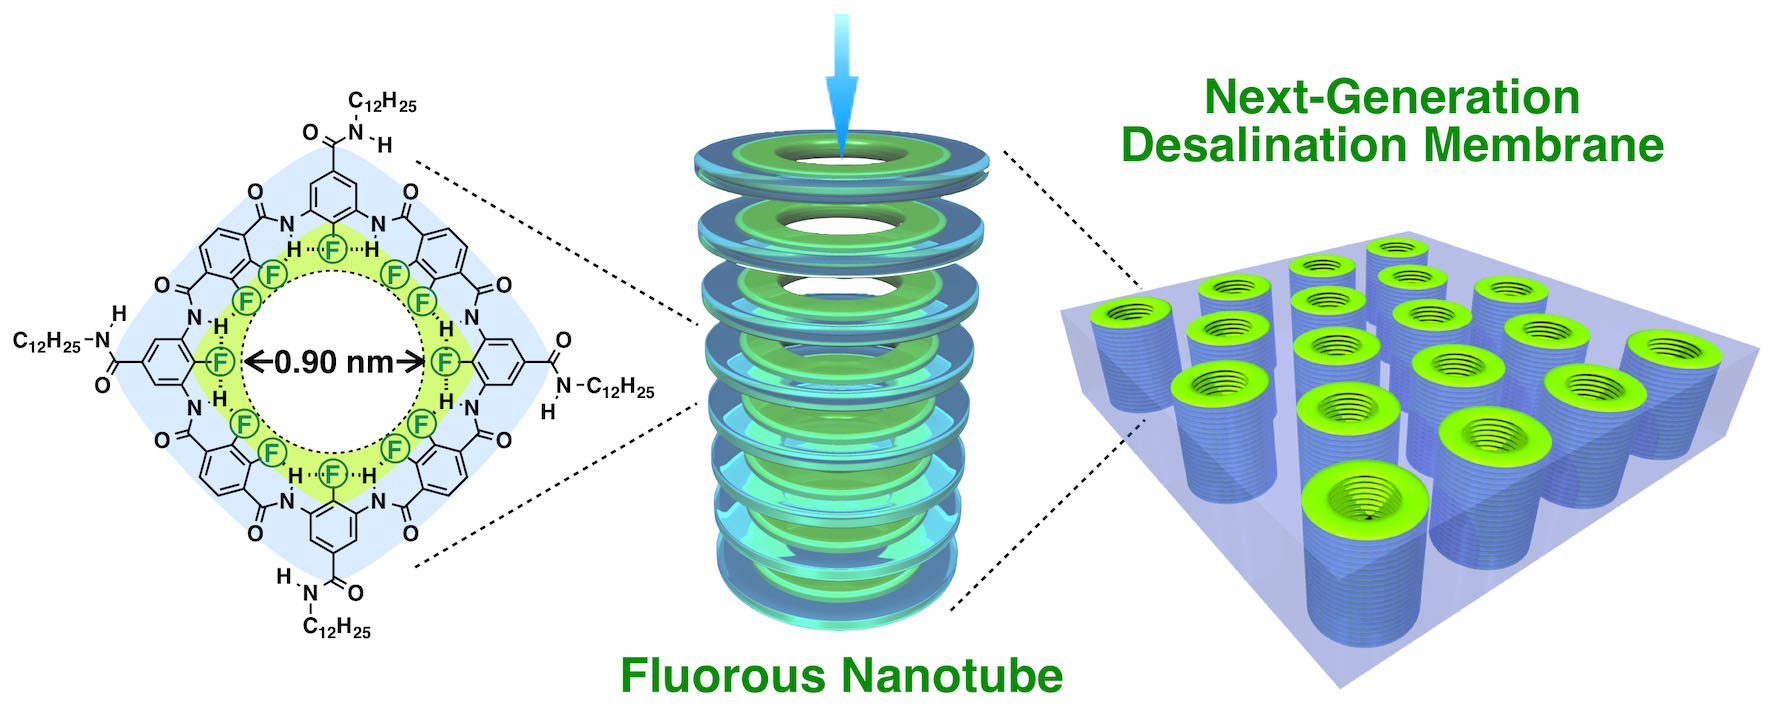 Fluorous nanotubes